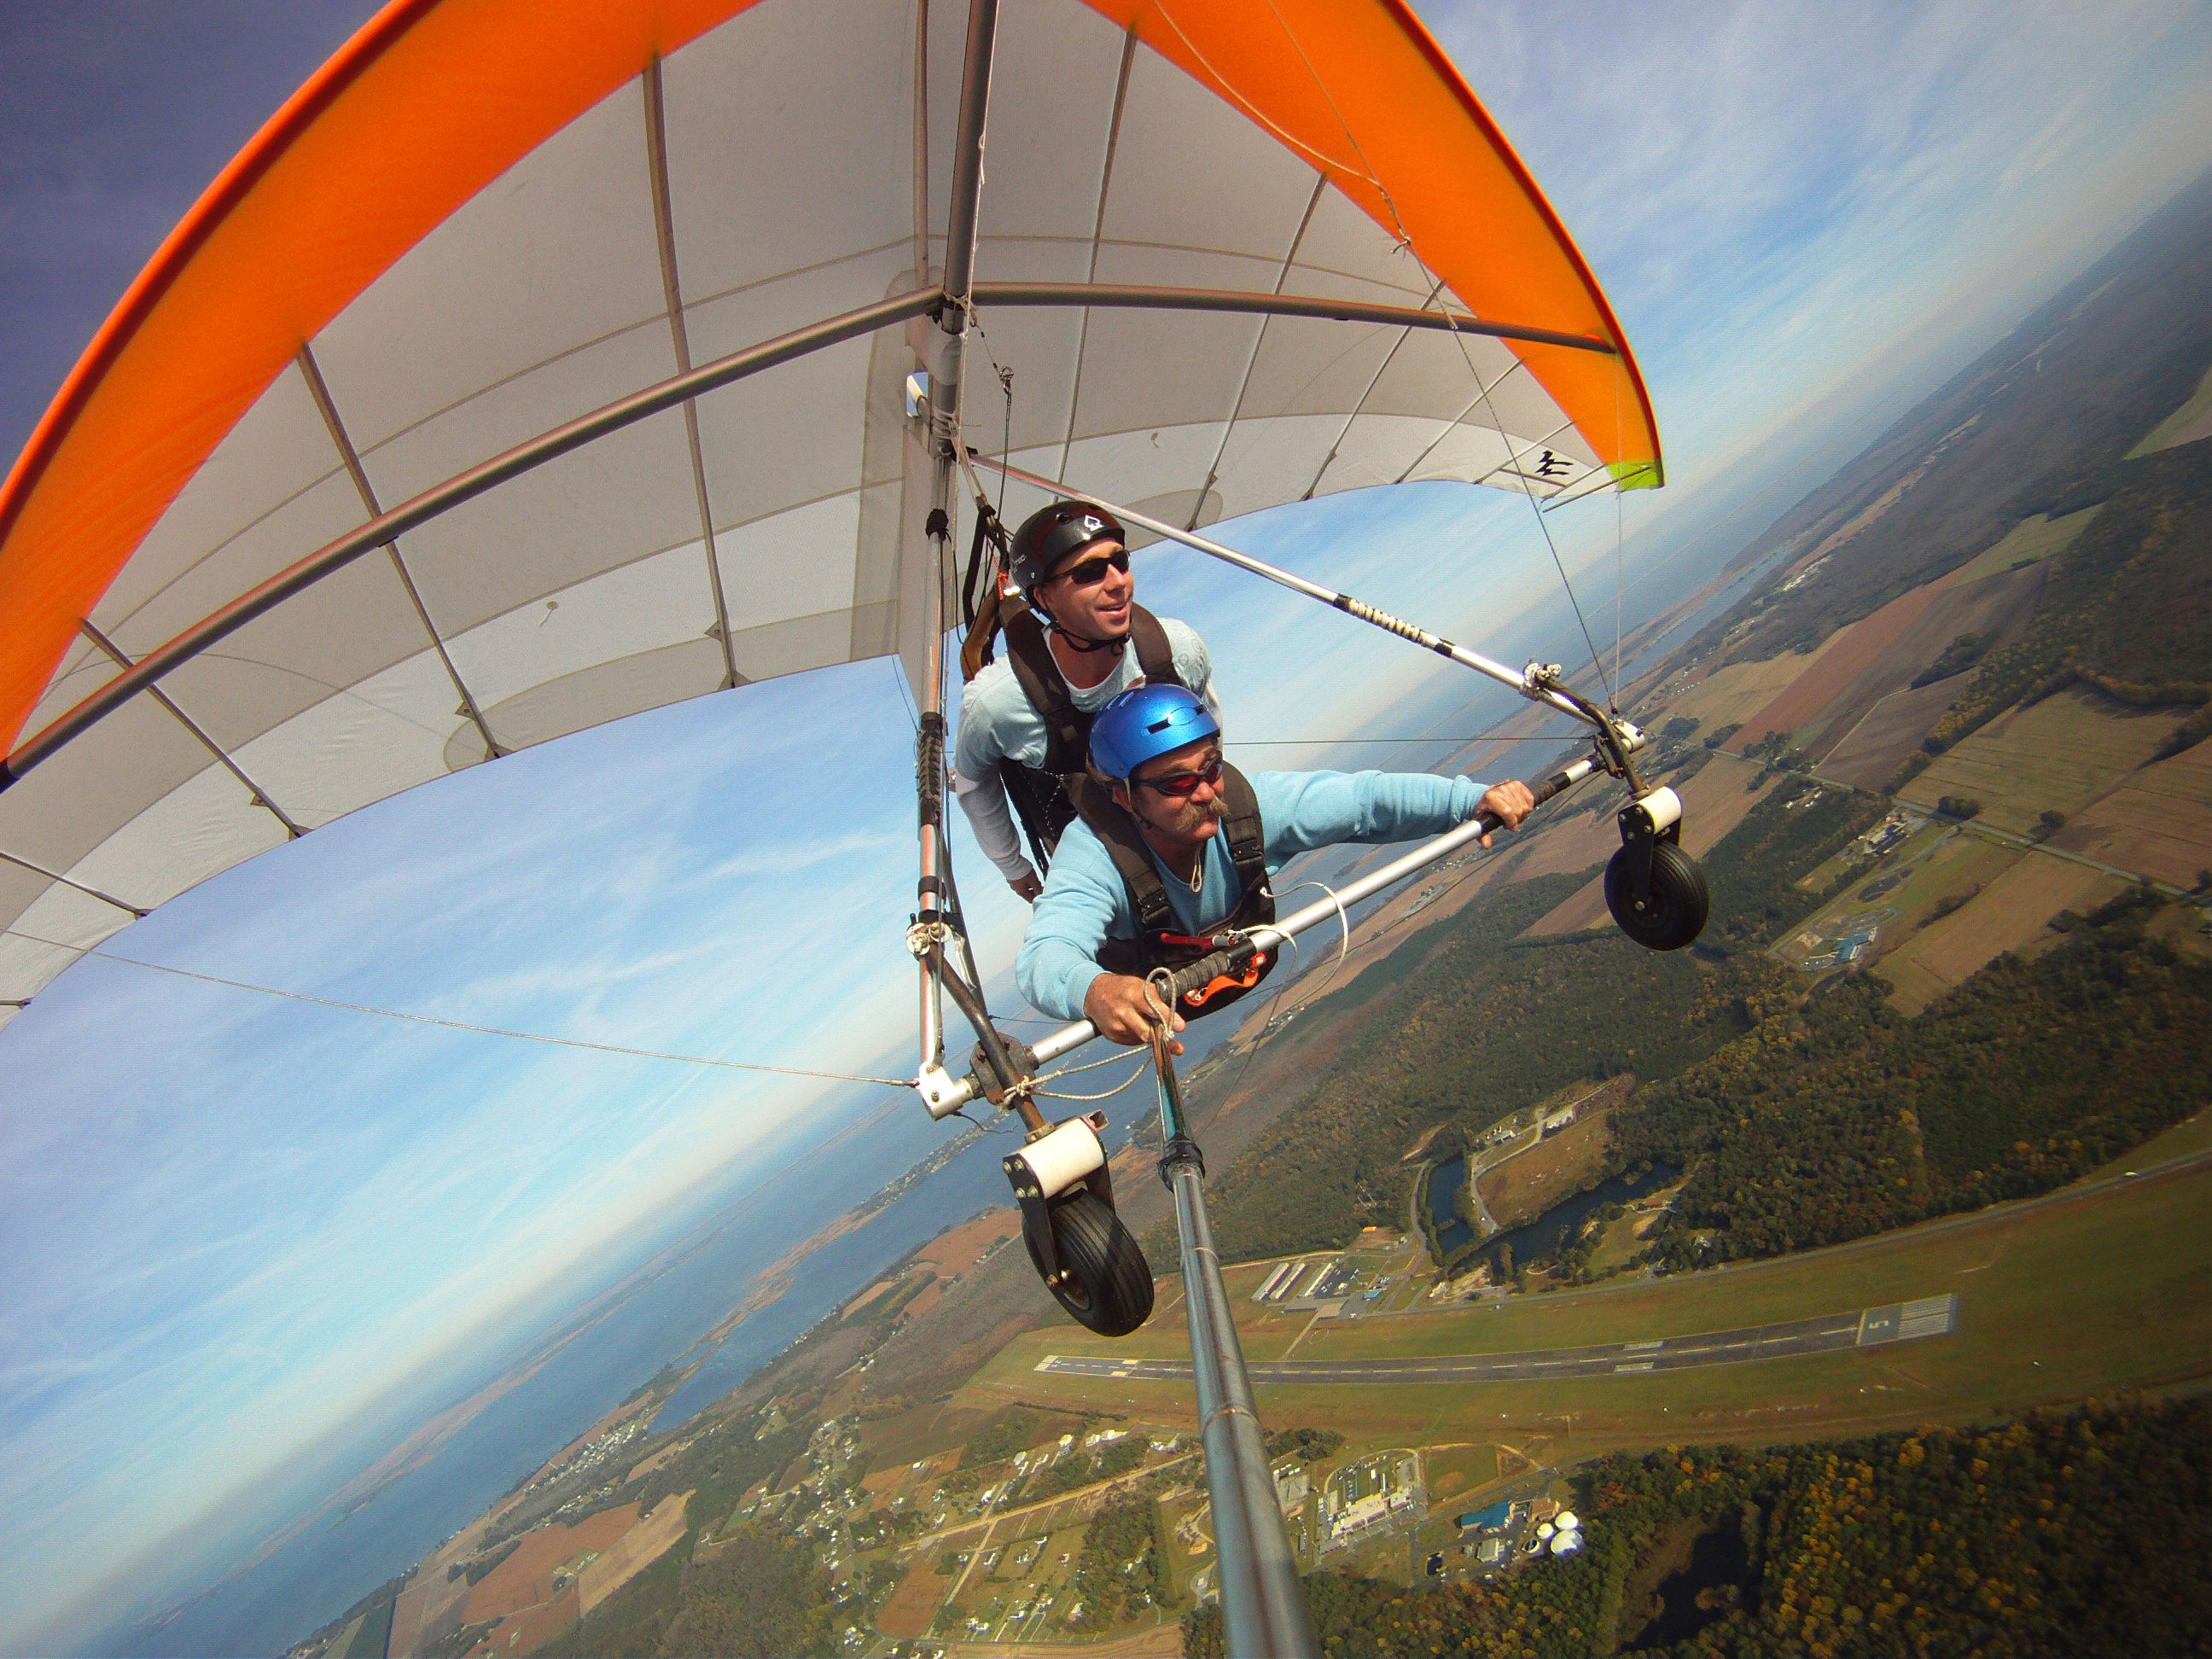 Hang glider pilot, Jonny Thompson flying a tandem hang glider